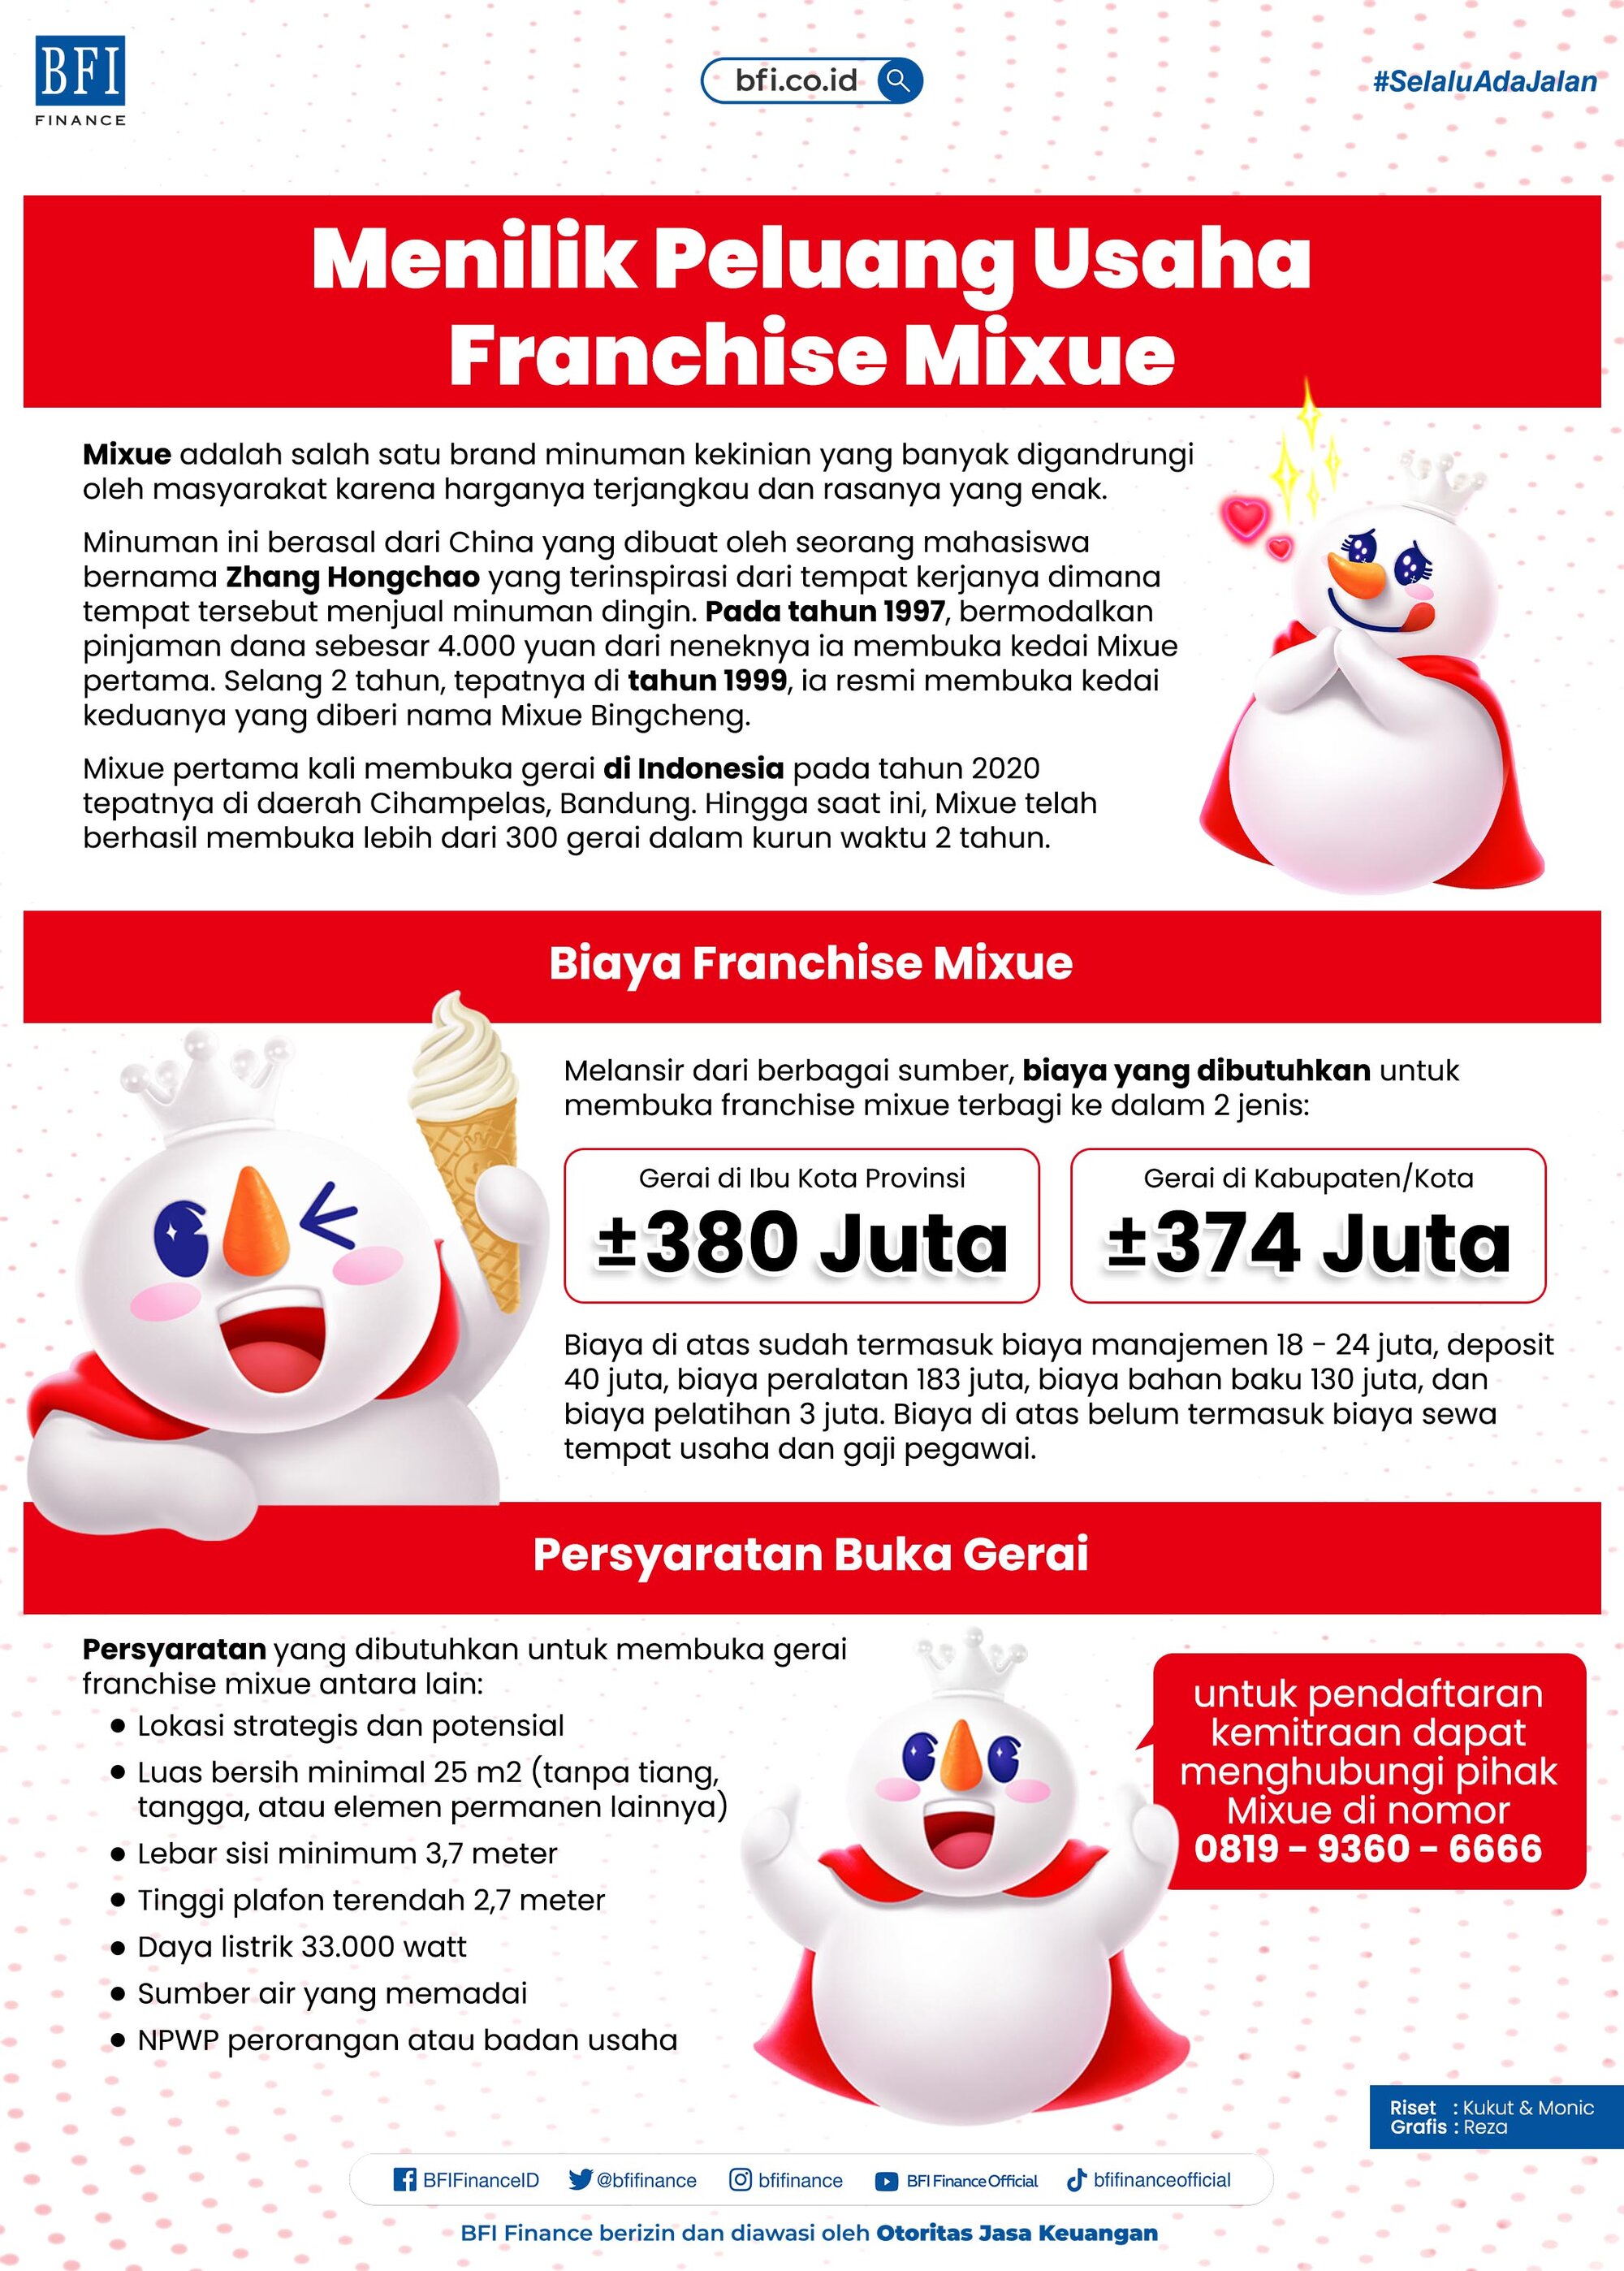 franchise mixue infografis